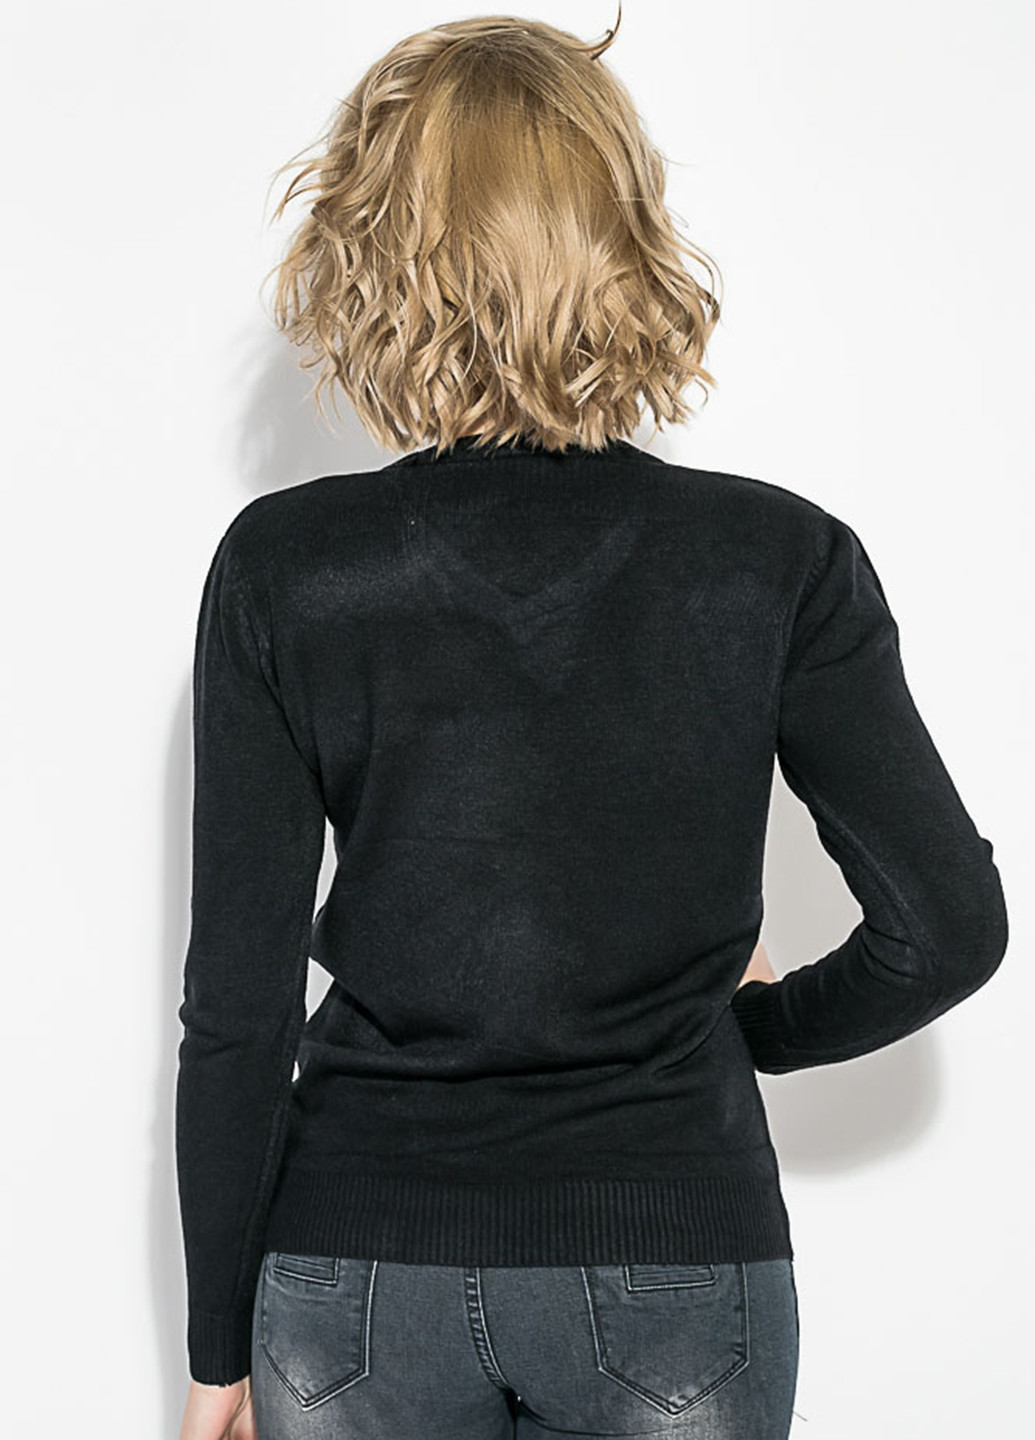 Черный демисезонный пуловер пуловер Time of Style